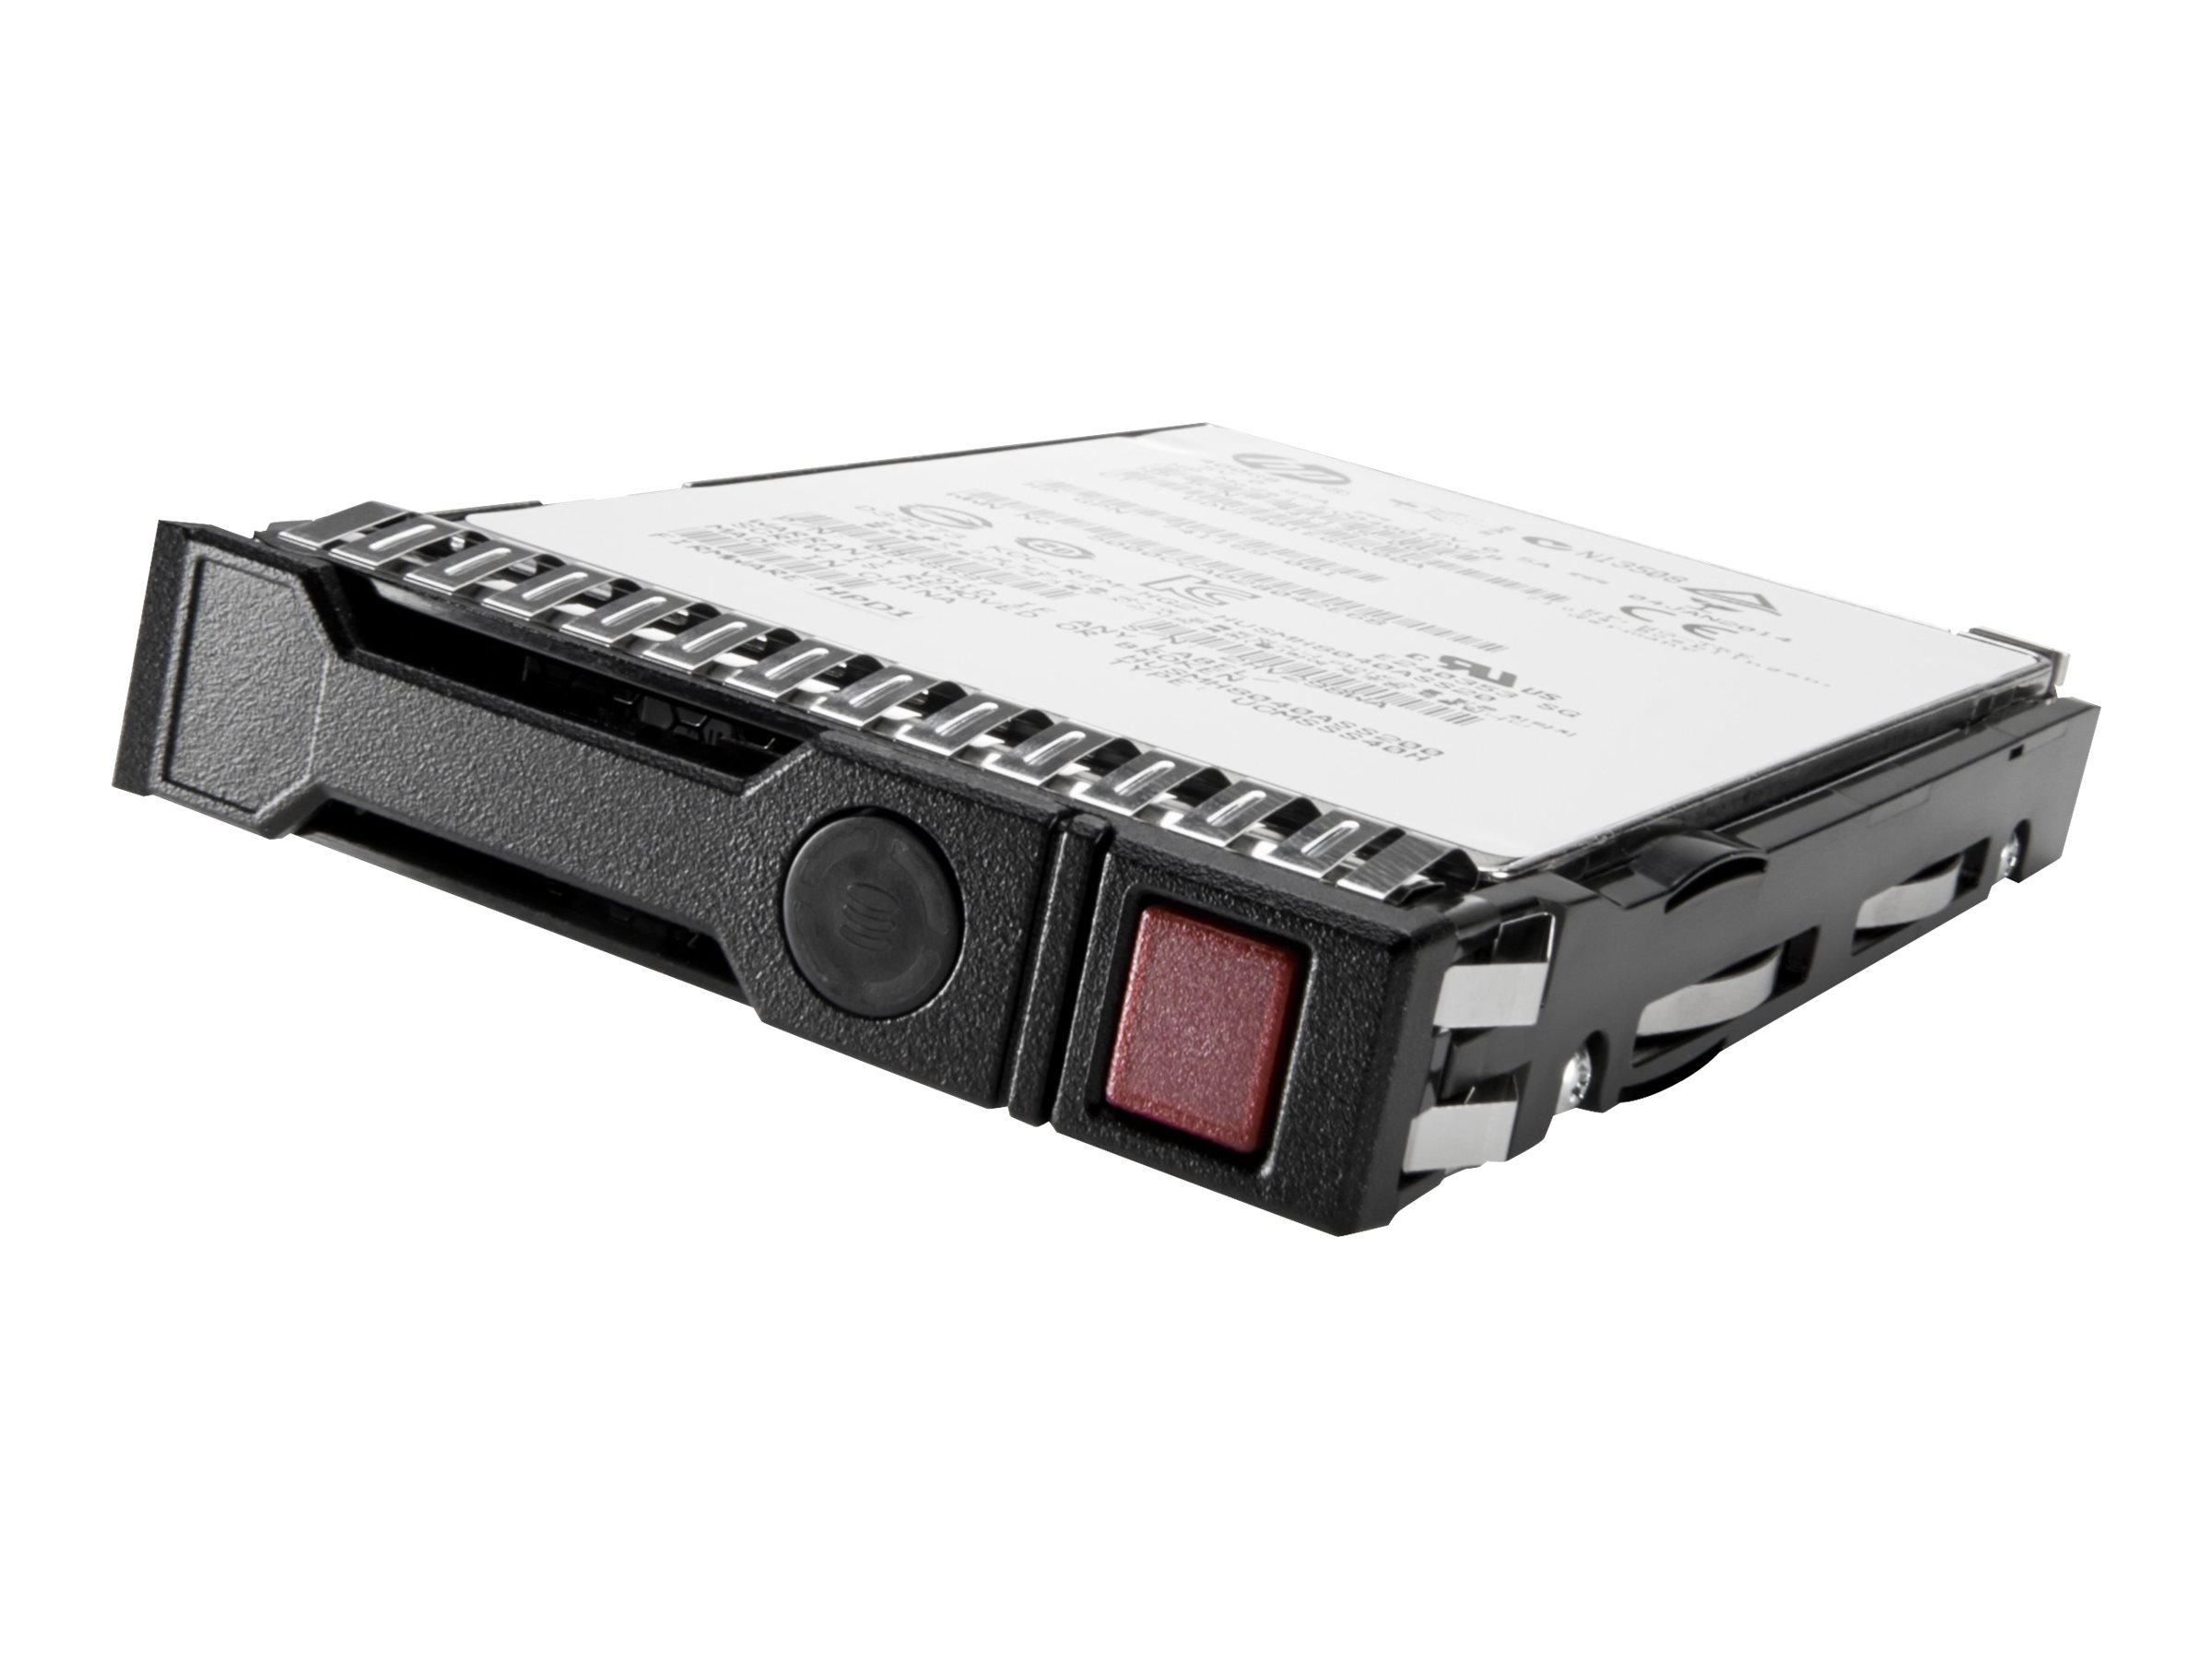 HPE Enterprise - Festplatte - 450 GB - Hot-Swap - 3.5